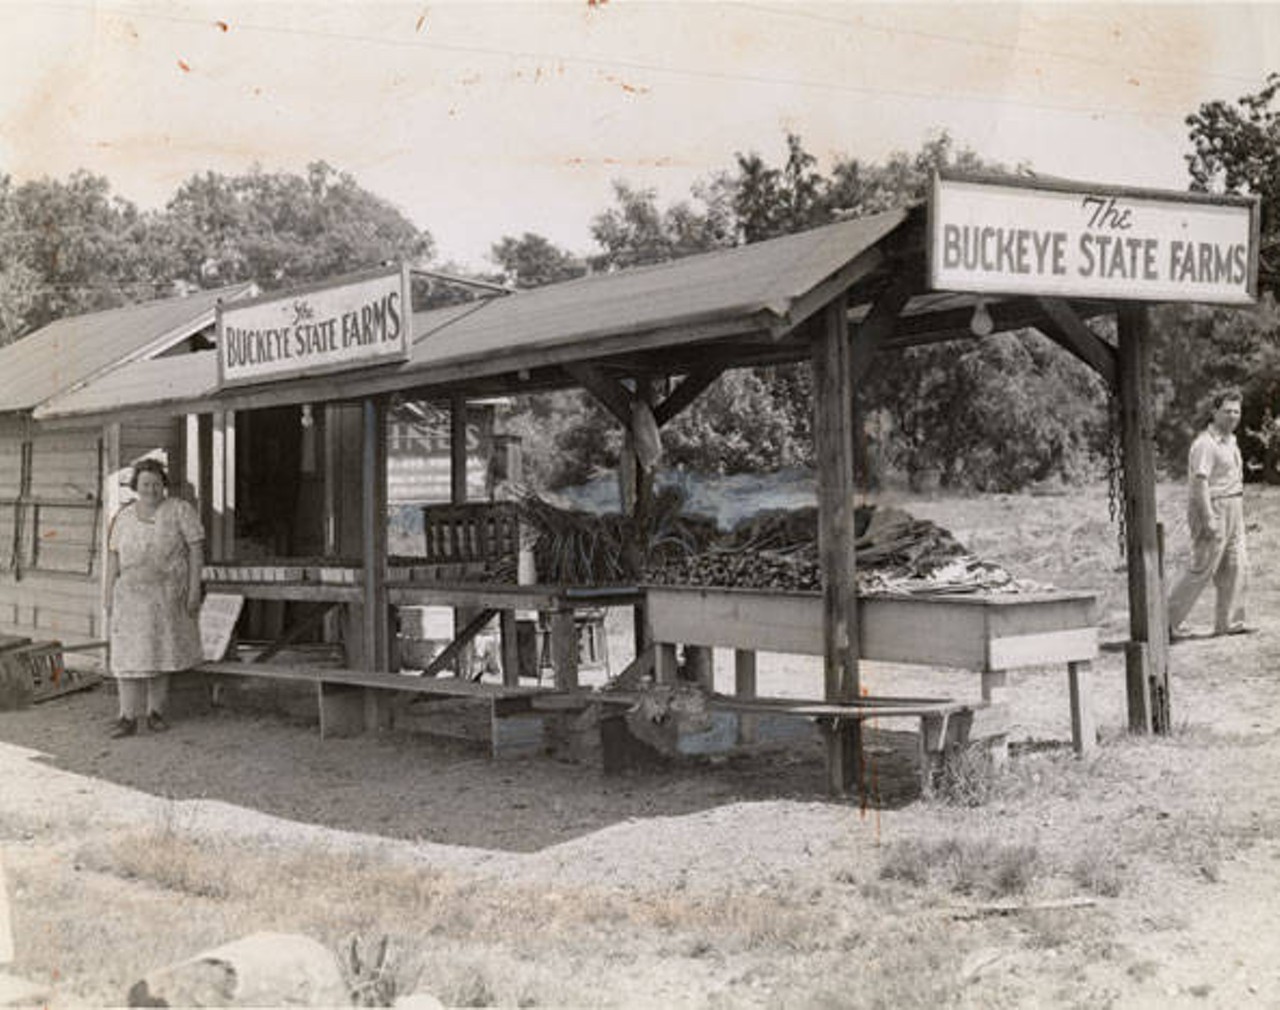  Buckeye State Farms, 1942 